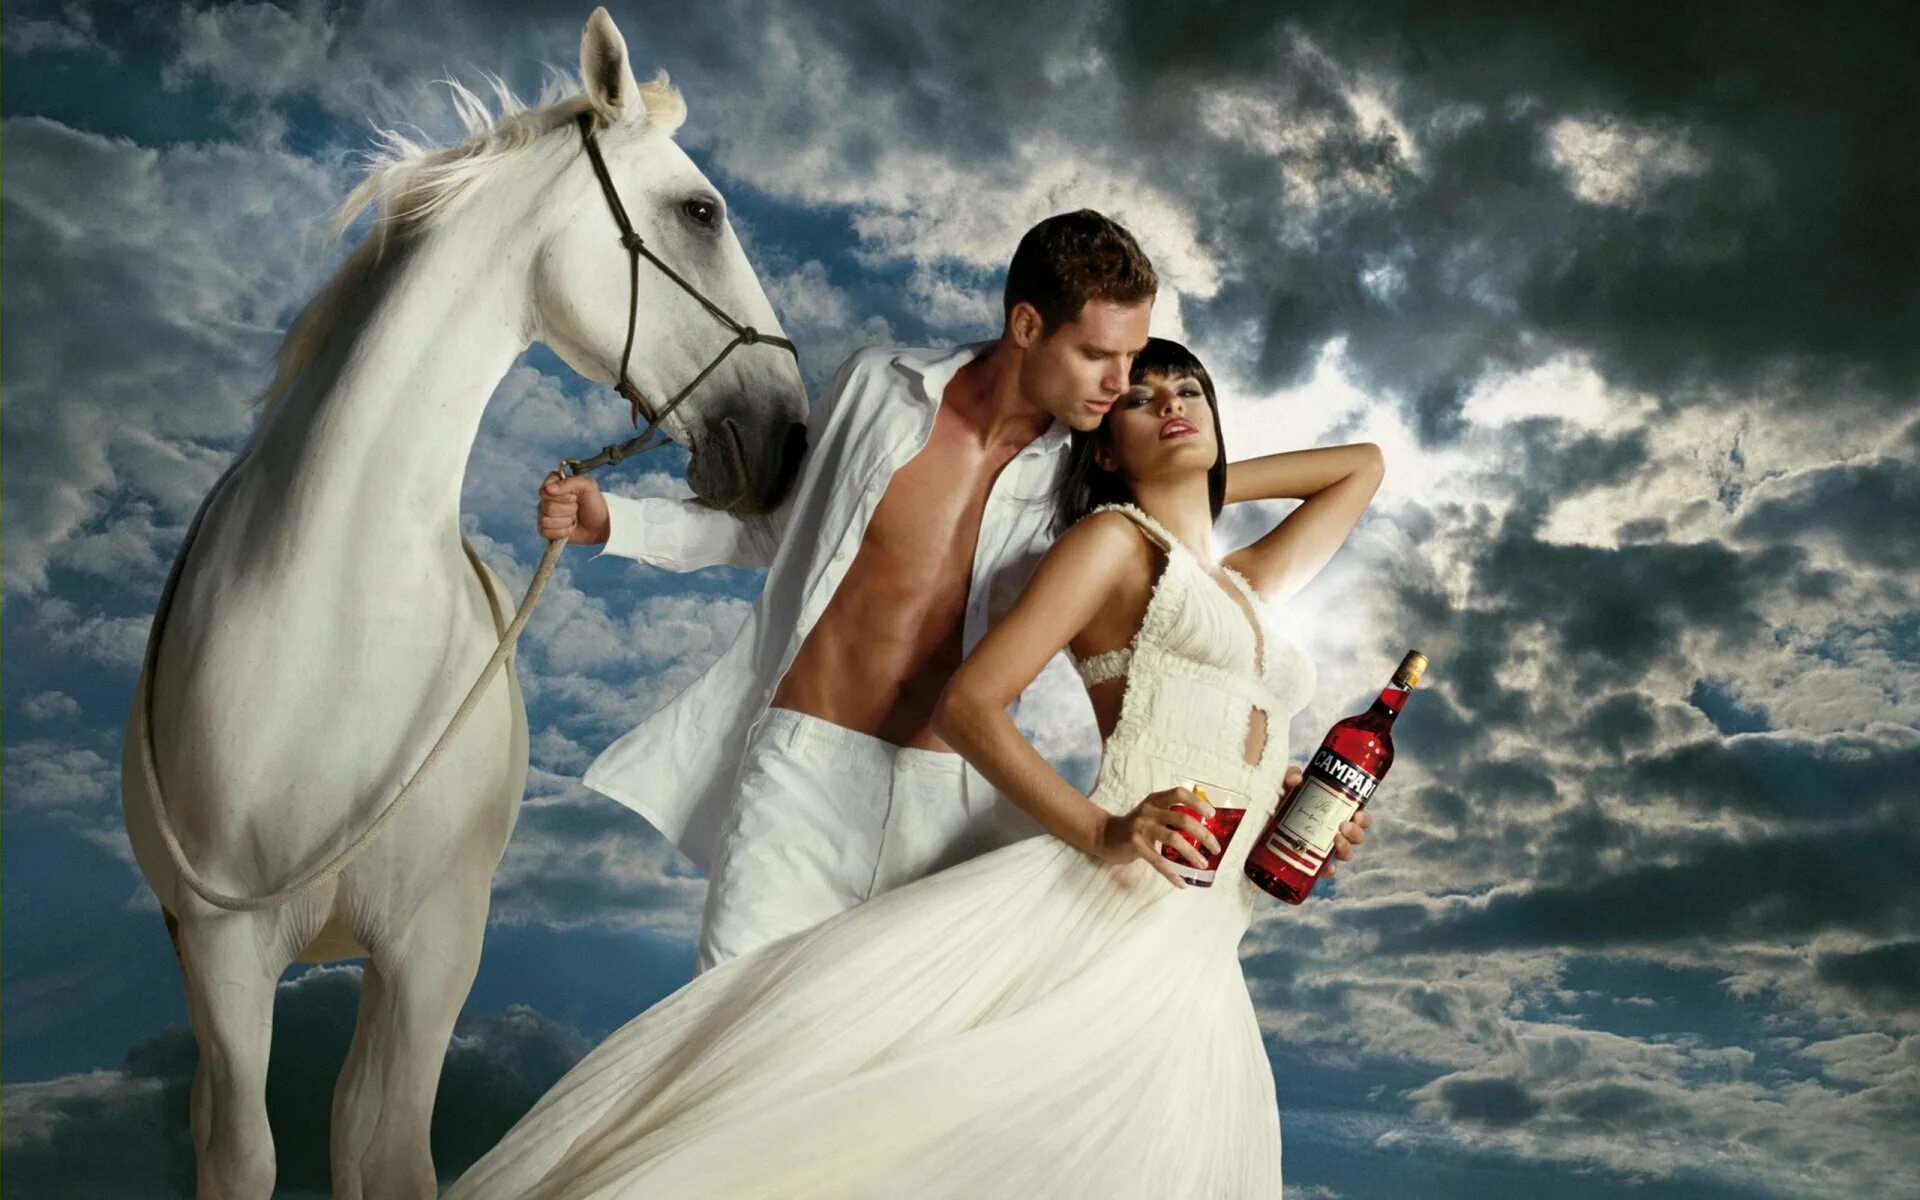 Везде все бело бело. Фотосессия с лошадьми. Мужчина и женщина на коне. Принц на белом коне.